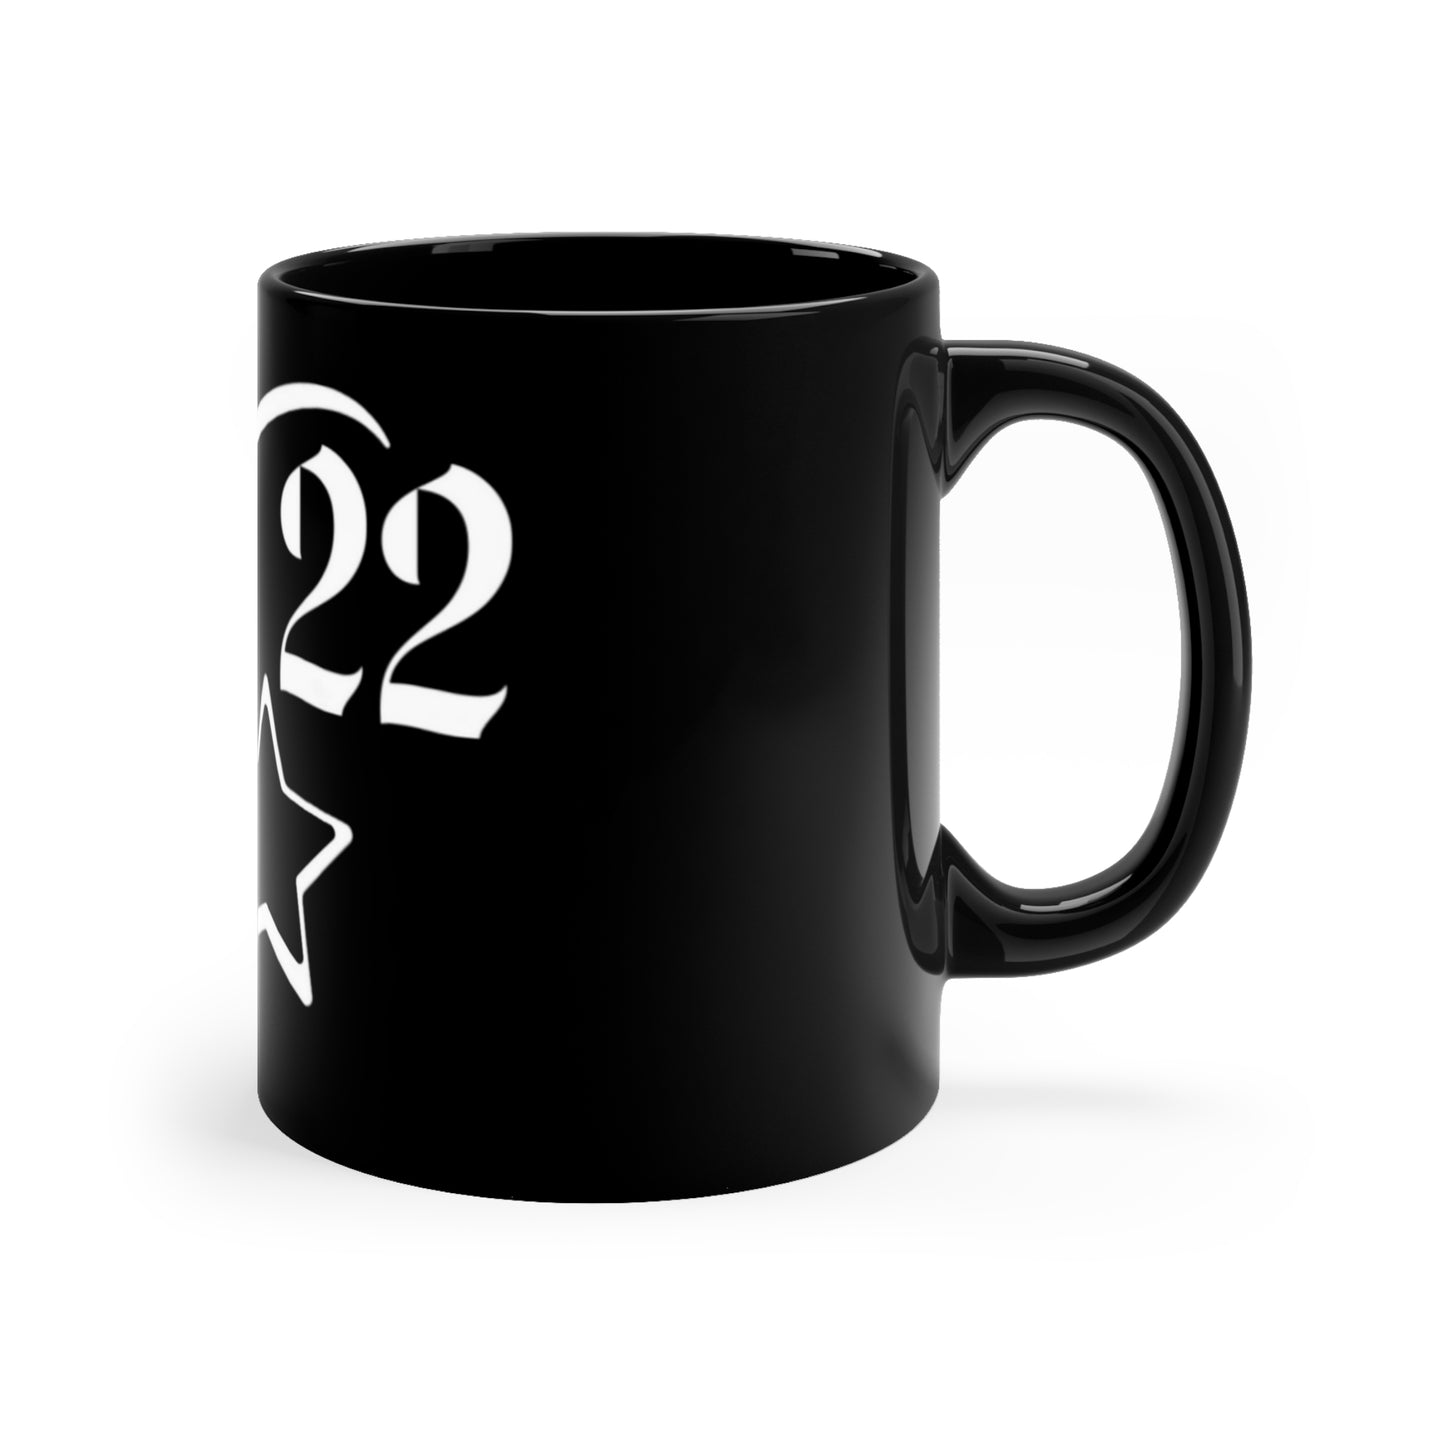 InkTherapy '22  11oz Black Mug